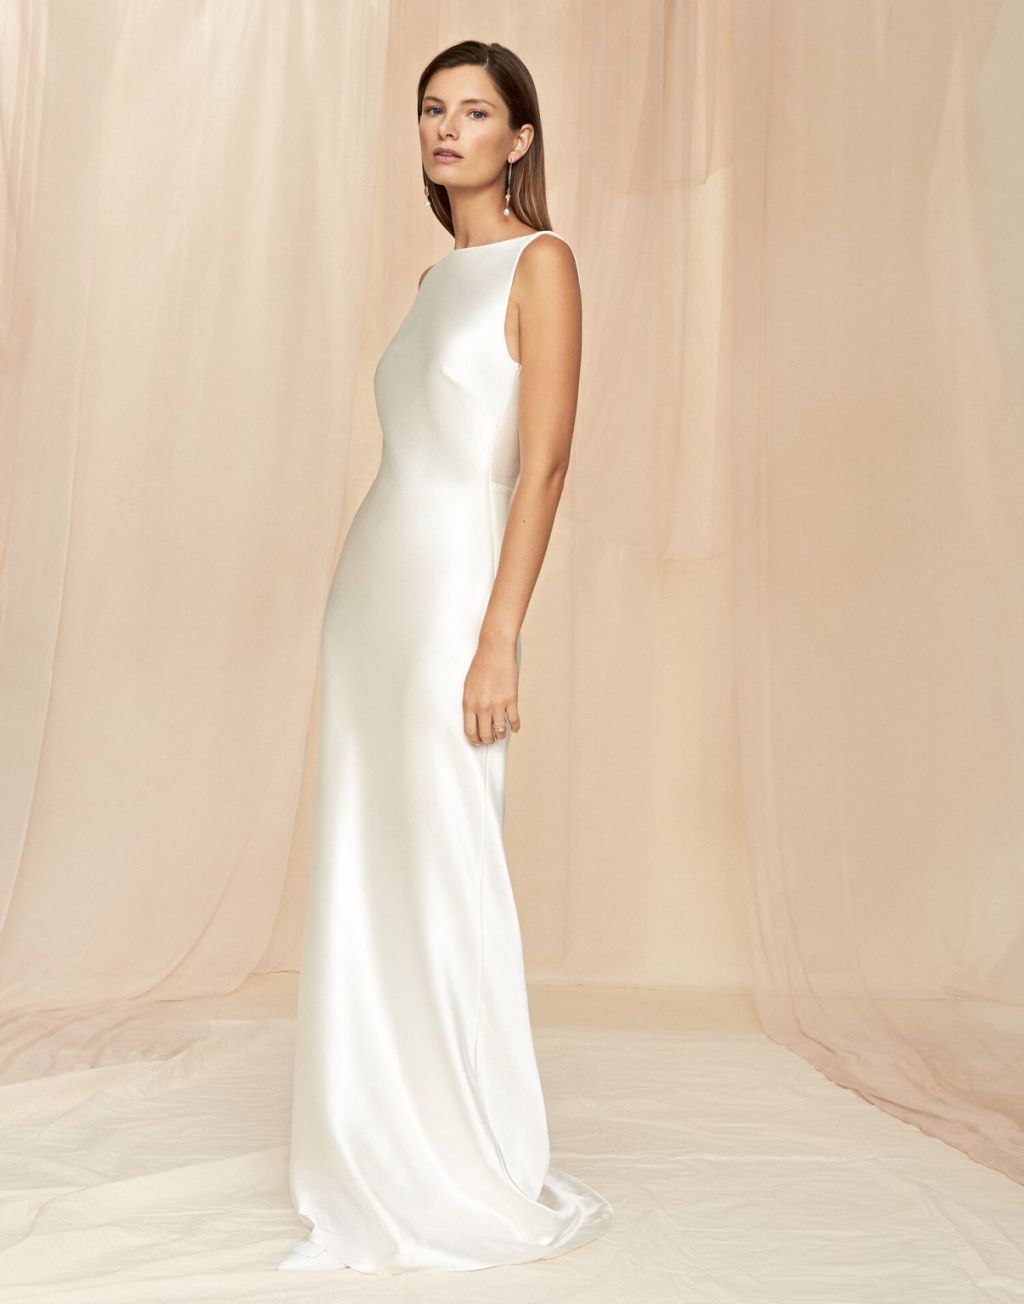 Savannah Miller - Kate wedding gown